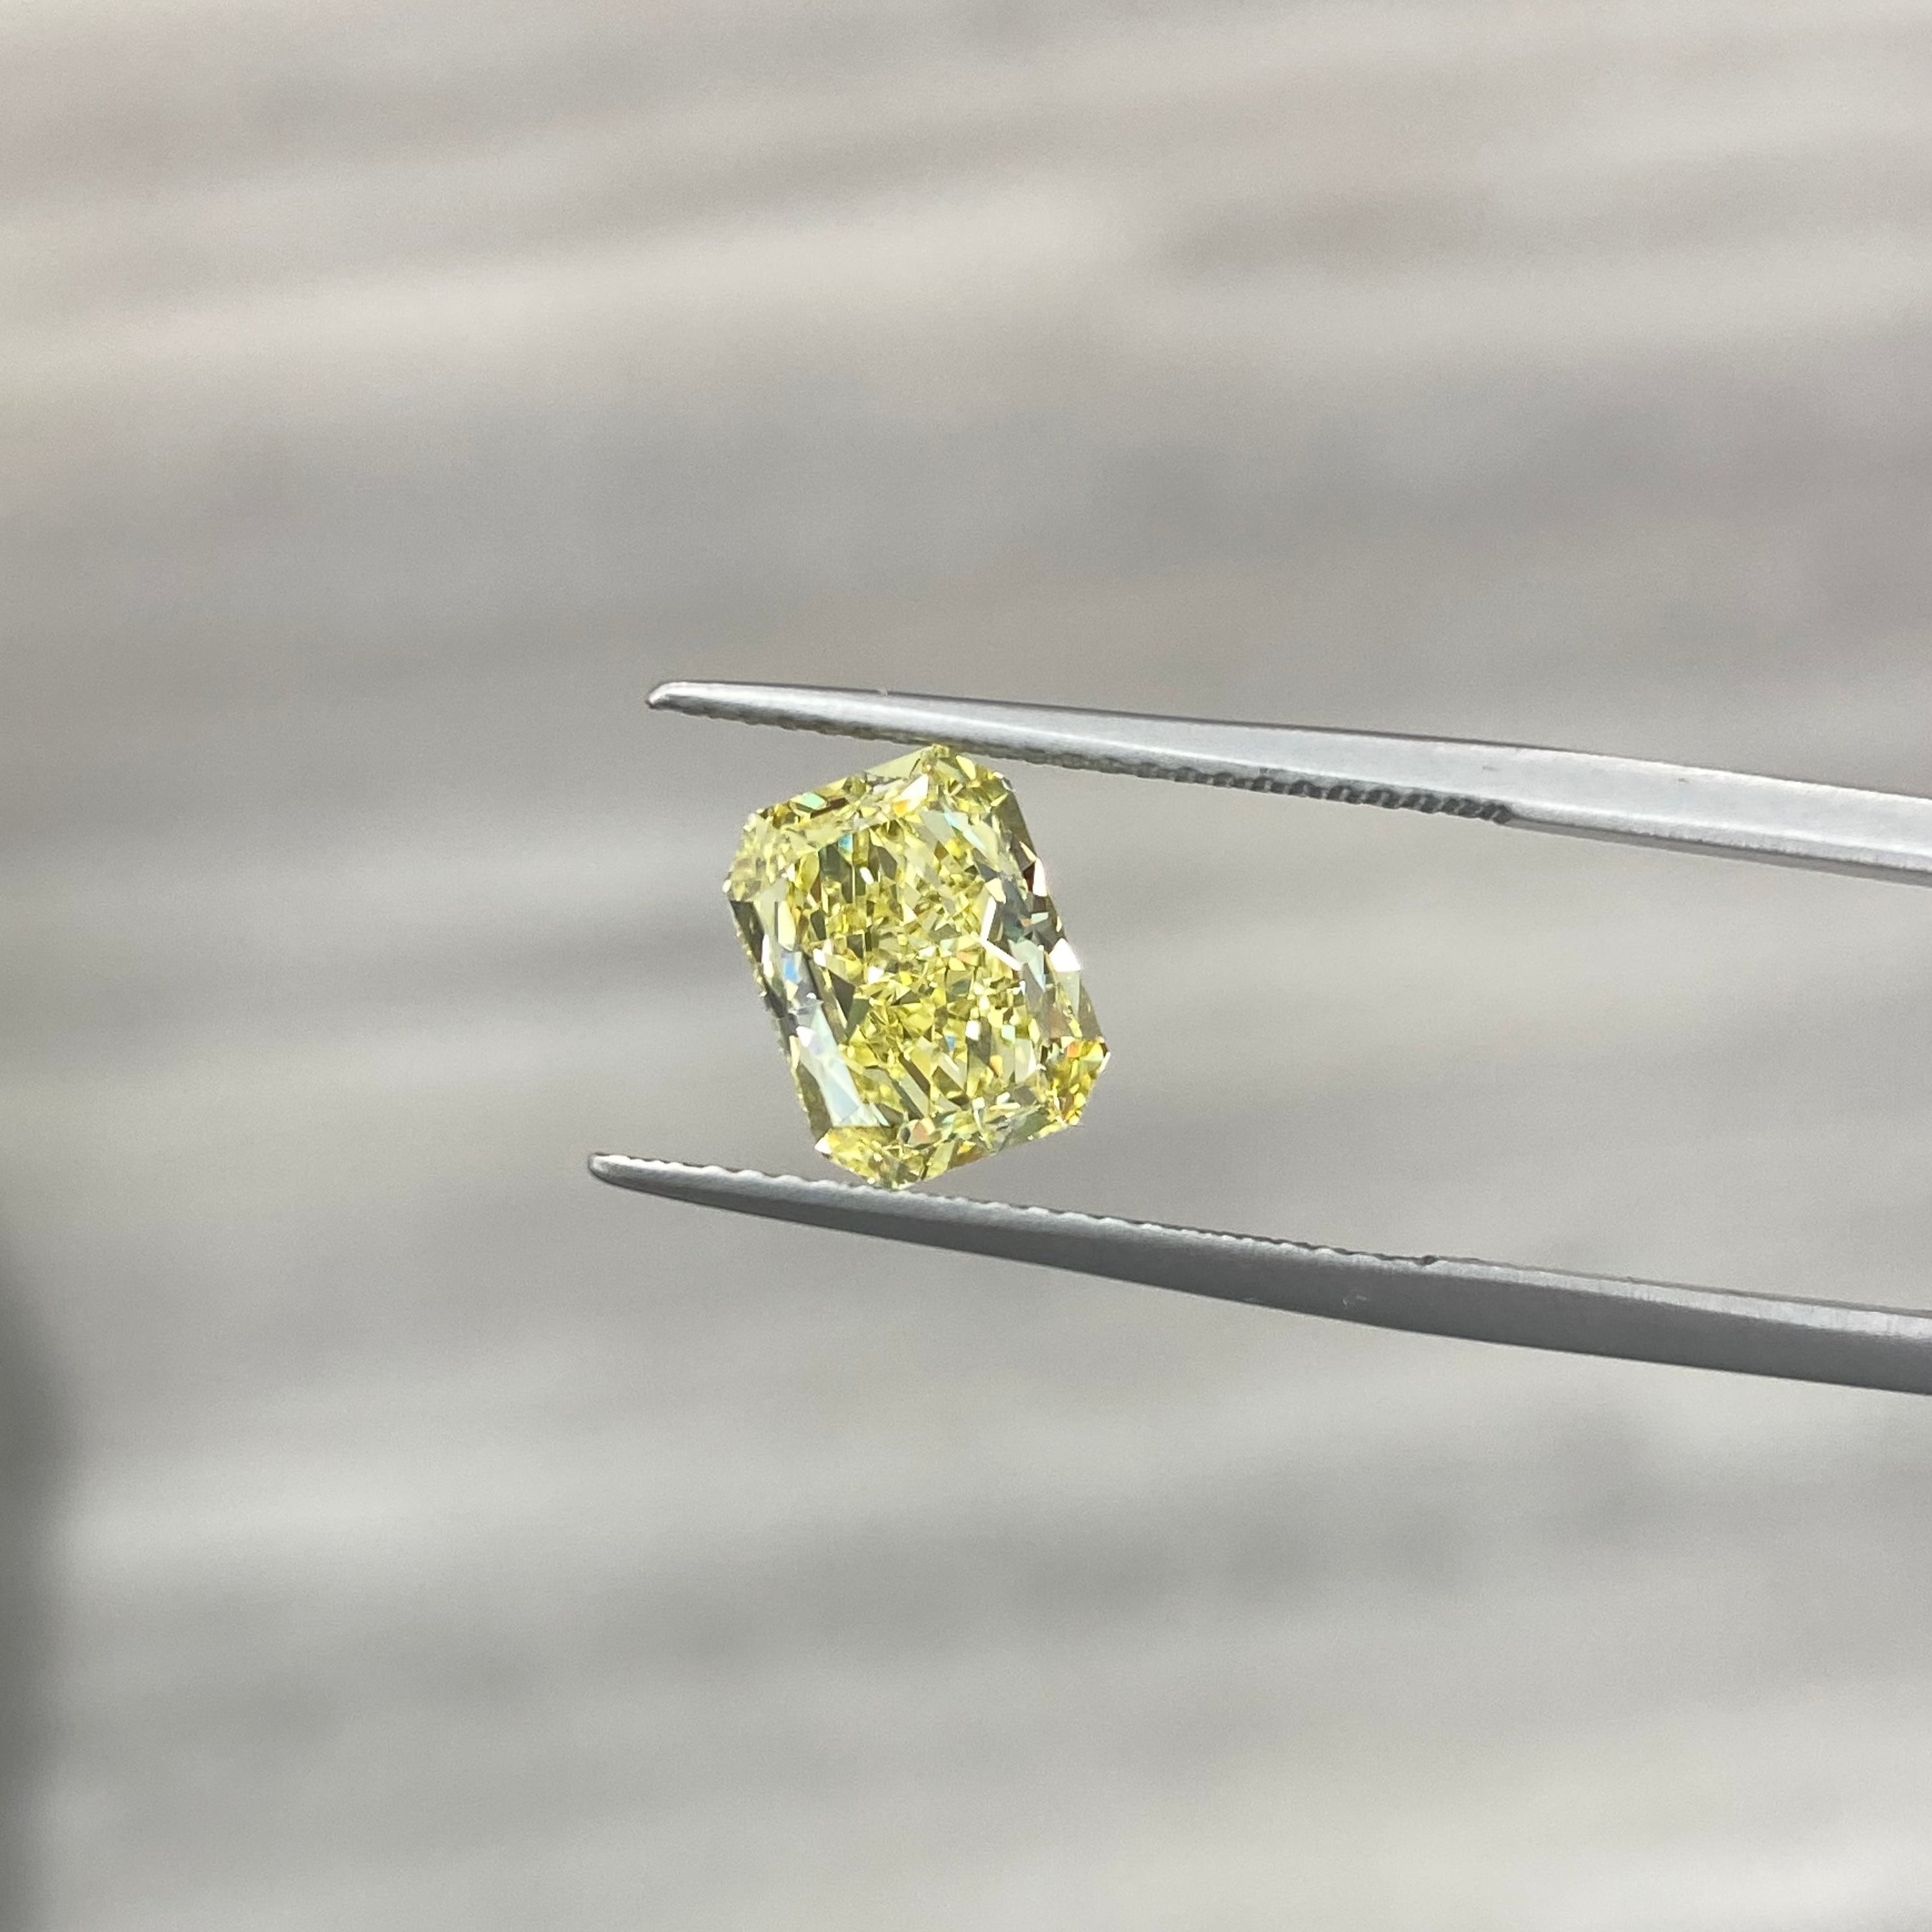 2.84ct GIA Fancy Intense Yellow Radiant Diamond - Loose